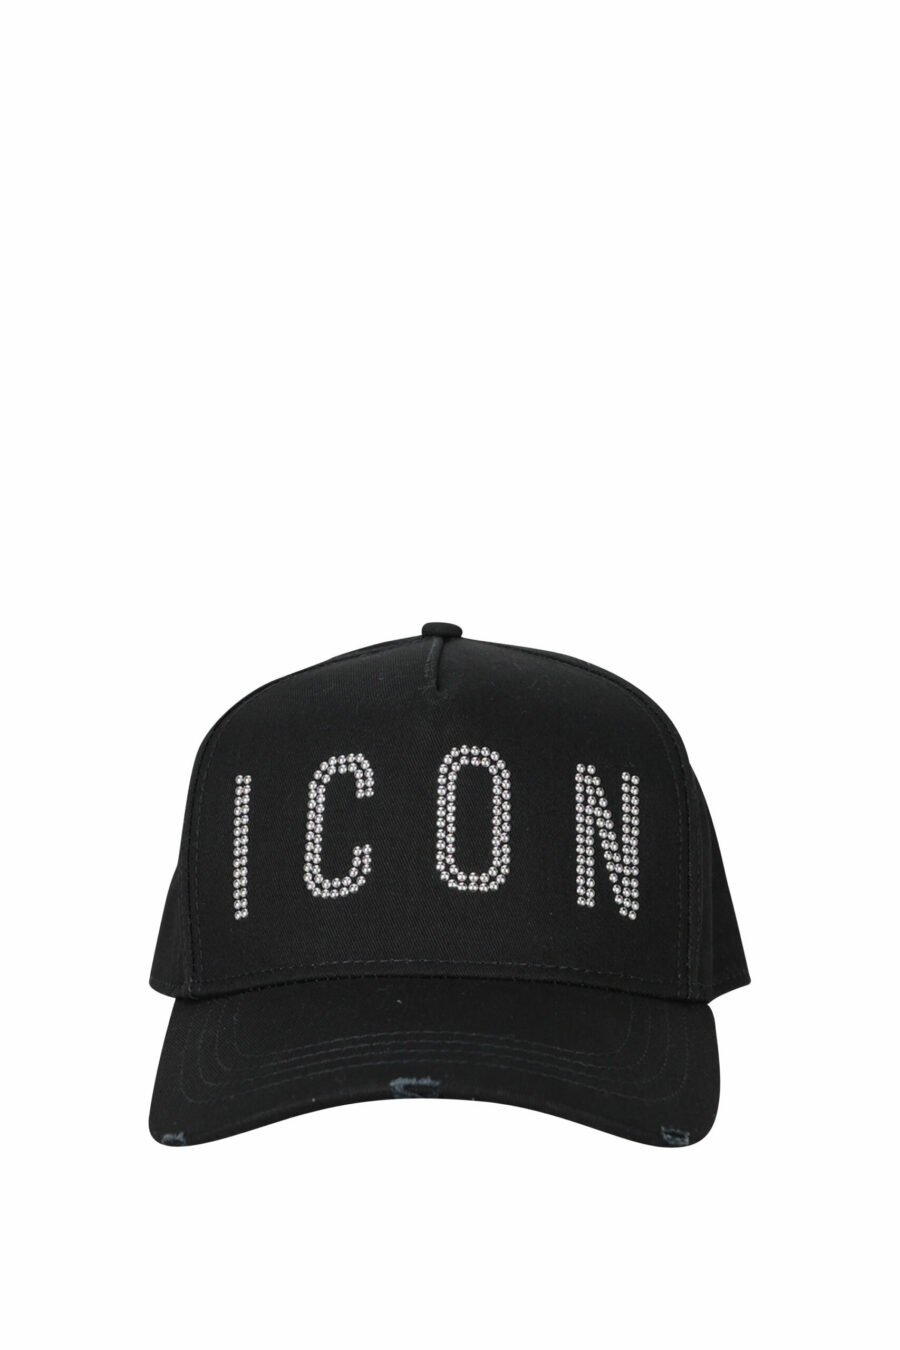 Black cap with "icon" logo - 8055777223000 scaled